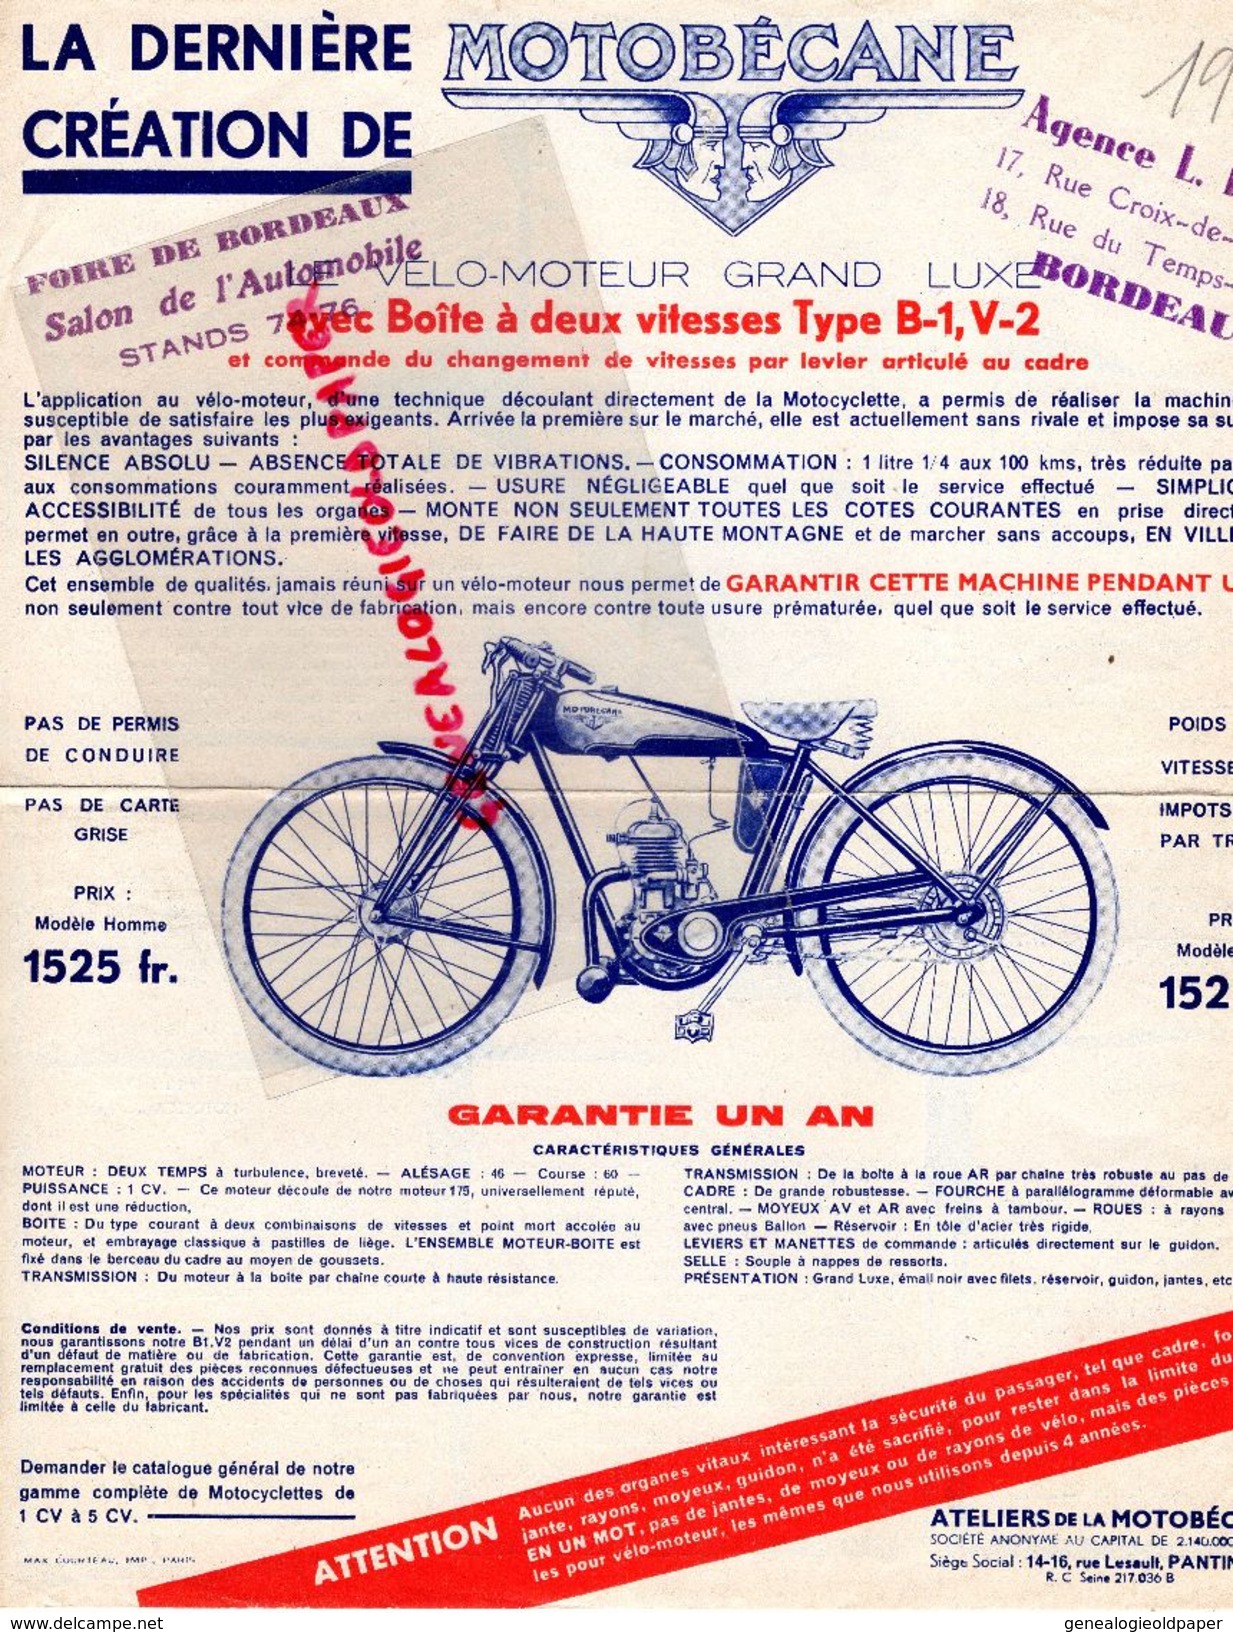 93- PANTIN-AGENCE BORDEAUX L. DELERME- FOIRE SALON AUTOMOBILE- MOTOBECANE VELO MOTEUR GRAND LUXE TYPE B1 V2-MOTO-1934 - Transport